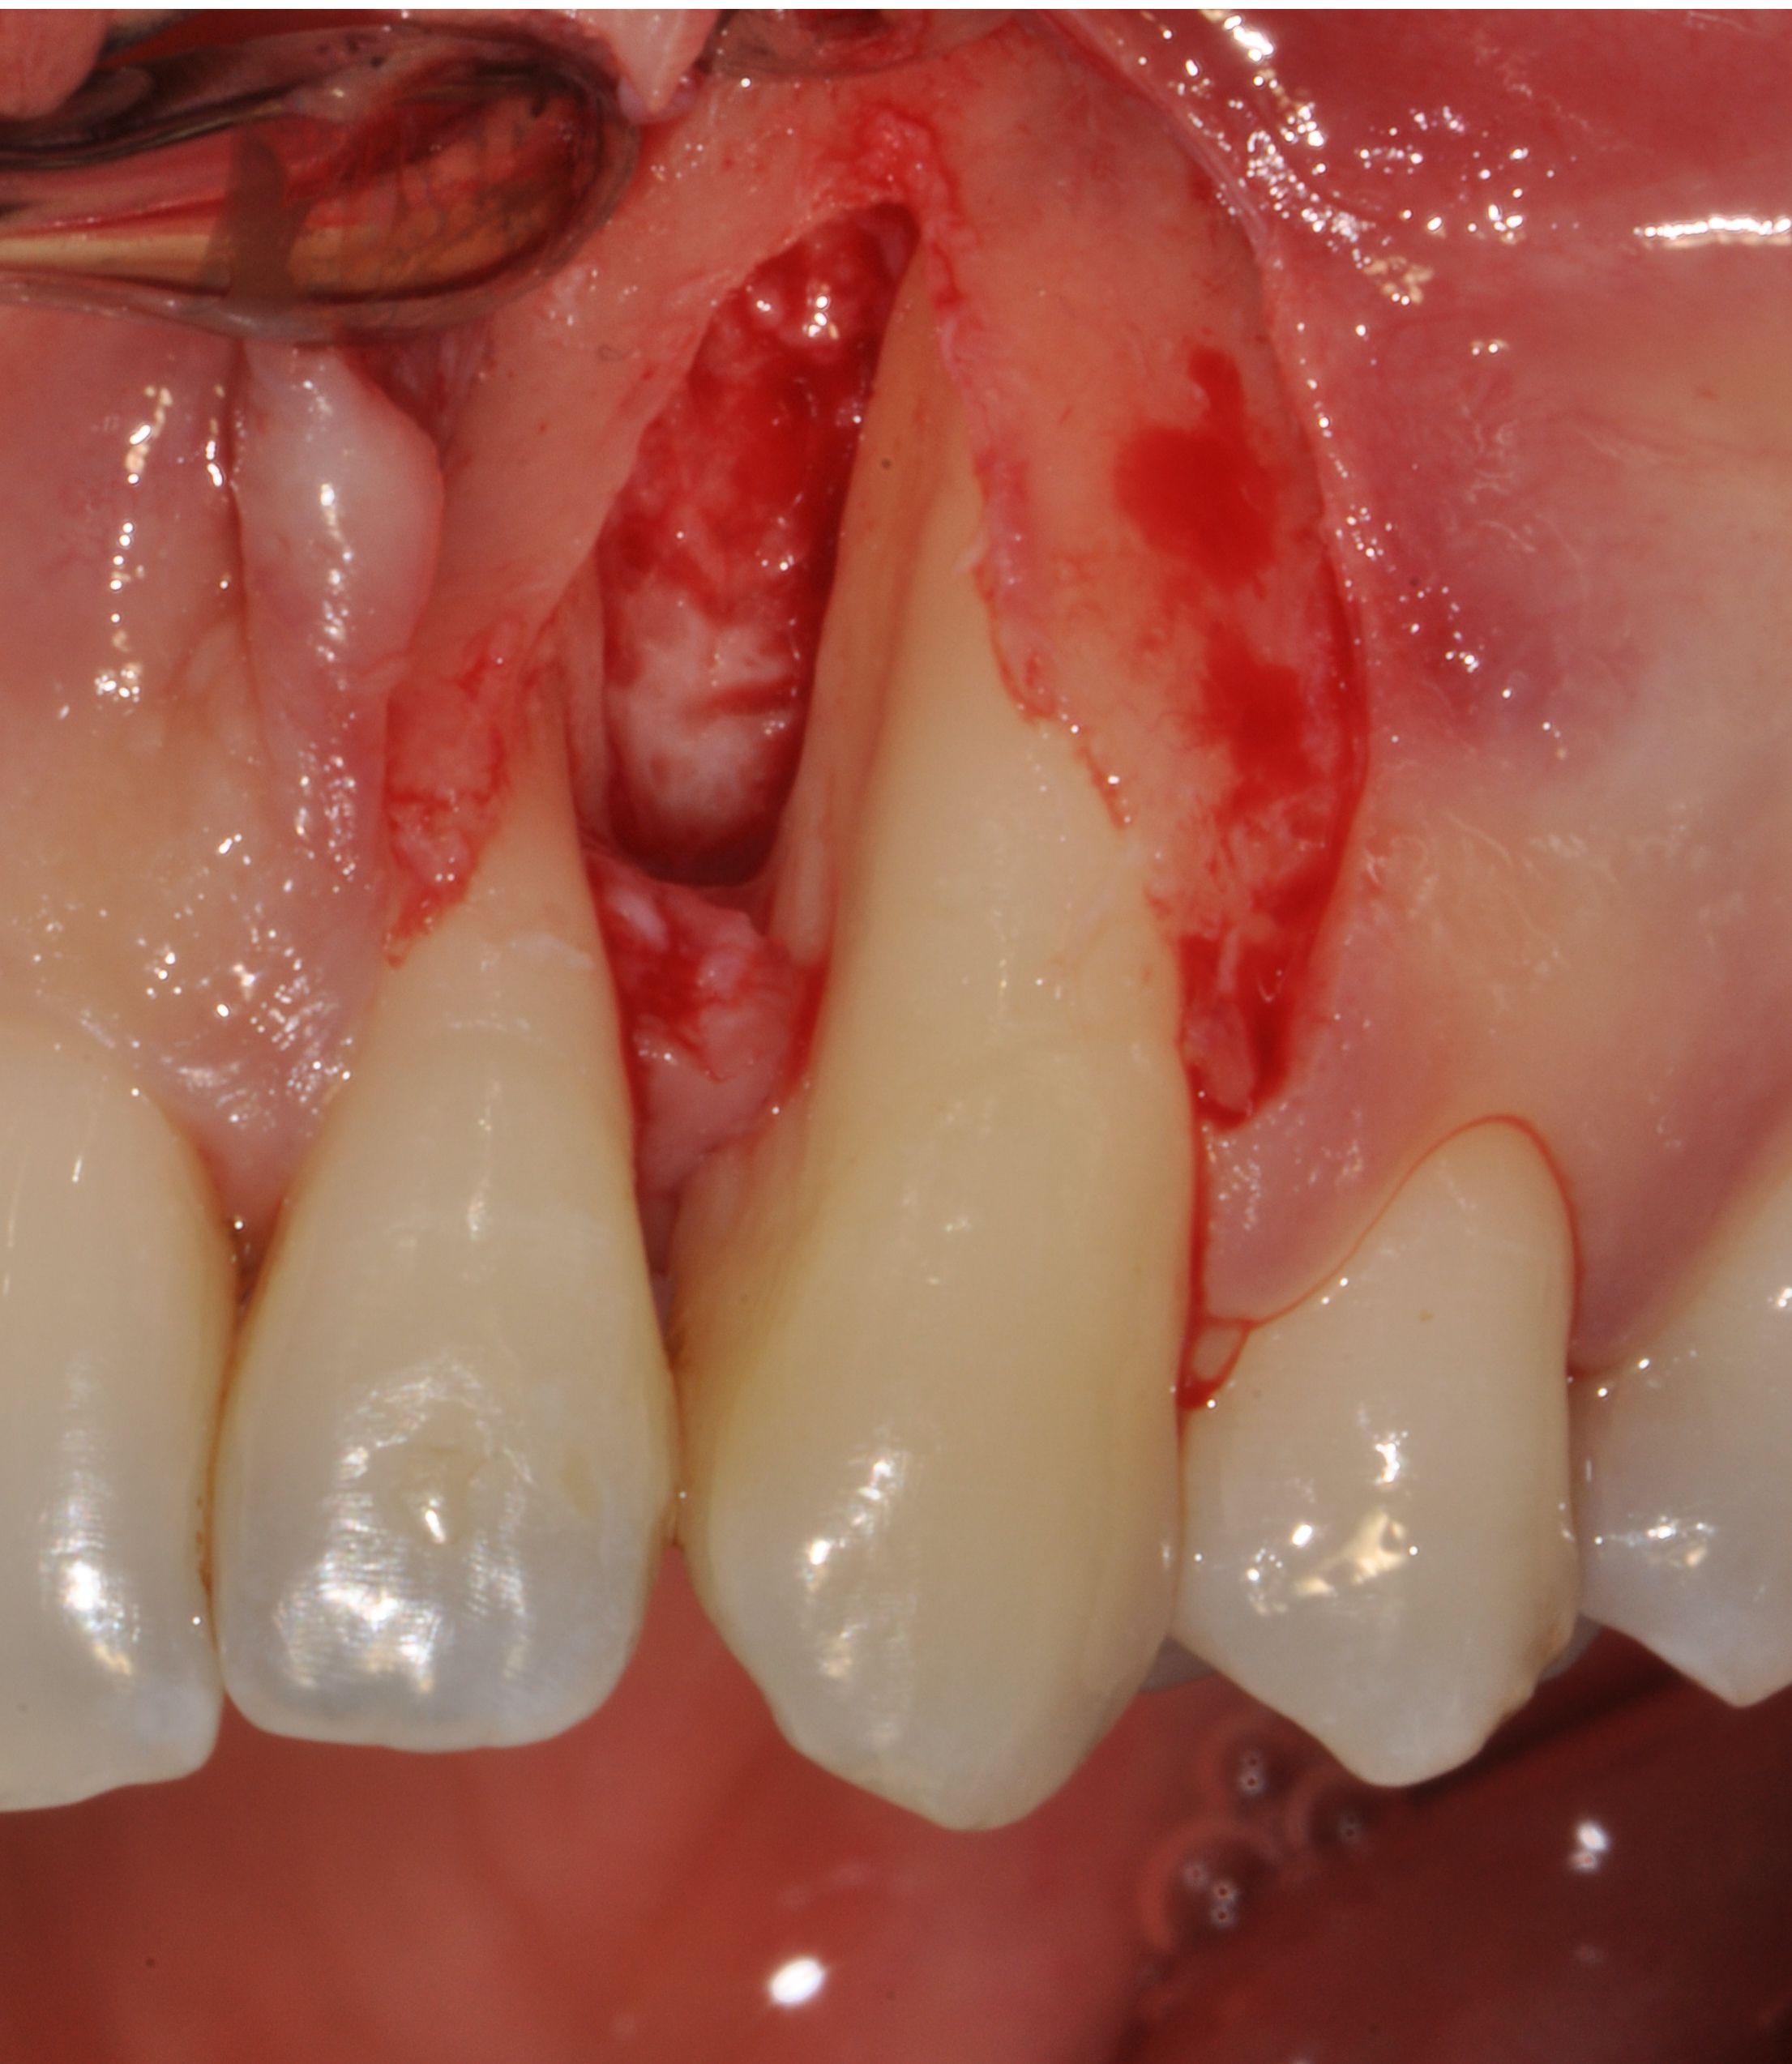 pre-treated periodontitis